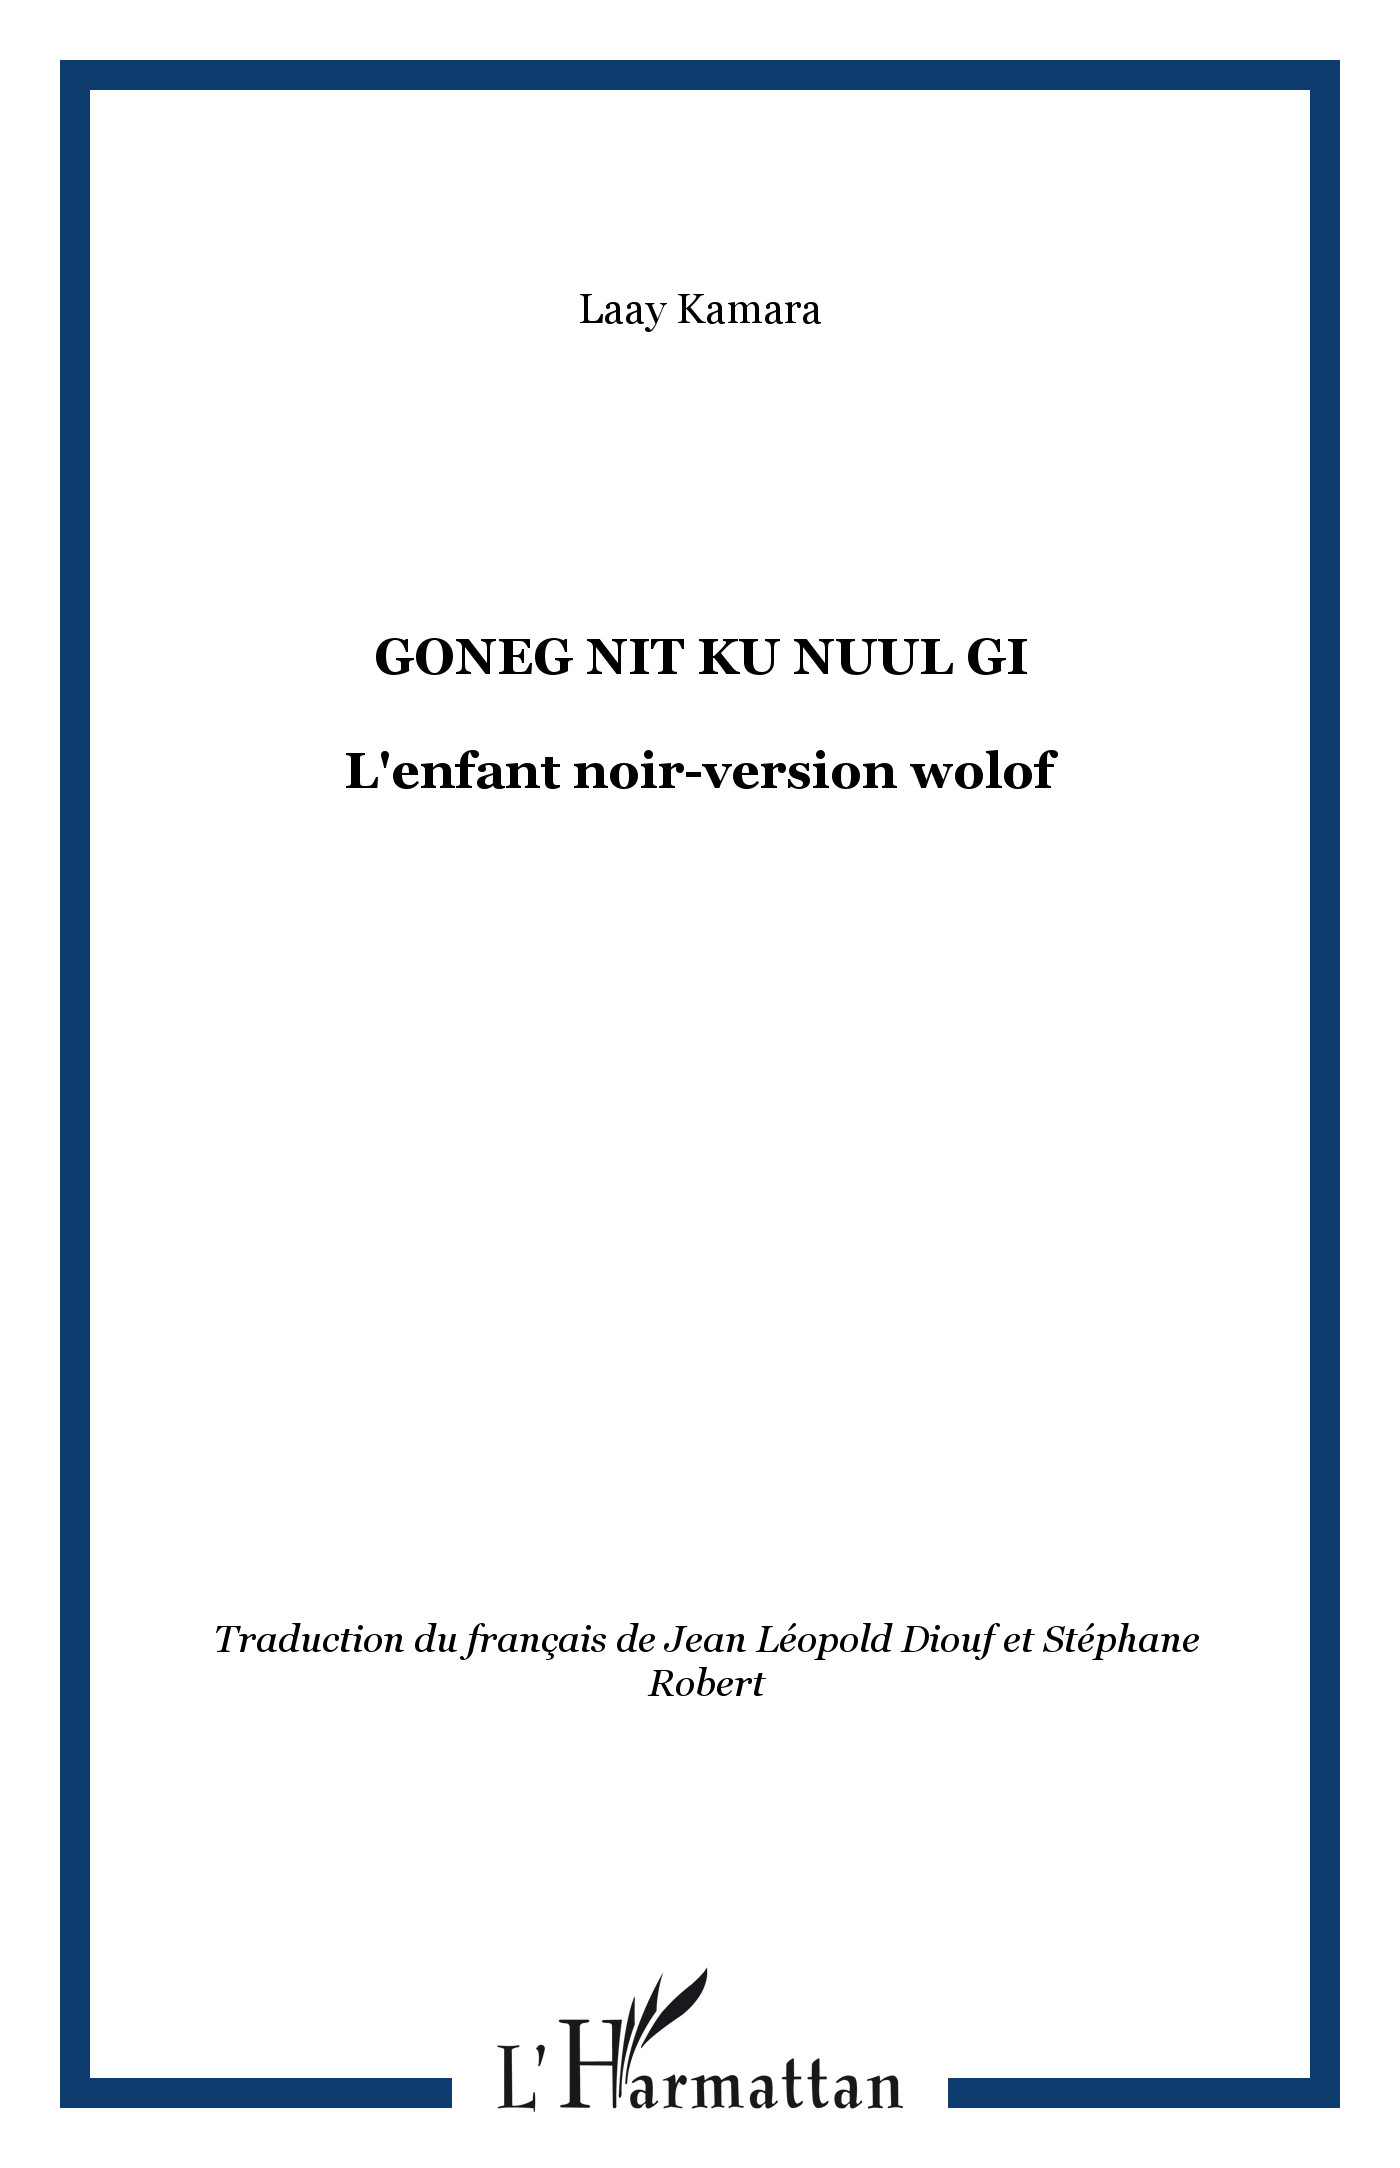 Goneg nit ku nuul gi, L'enfant noir-version wolof (9782296035096-front-cover)